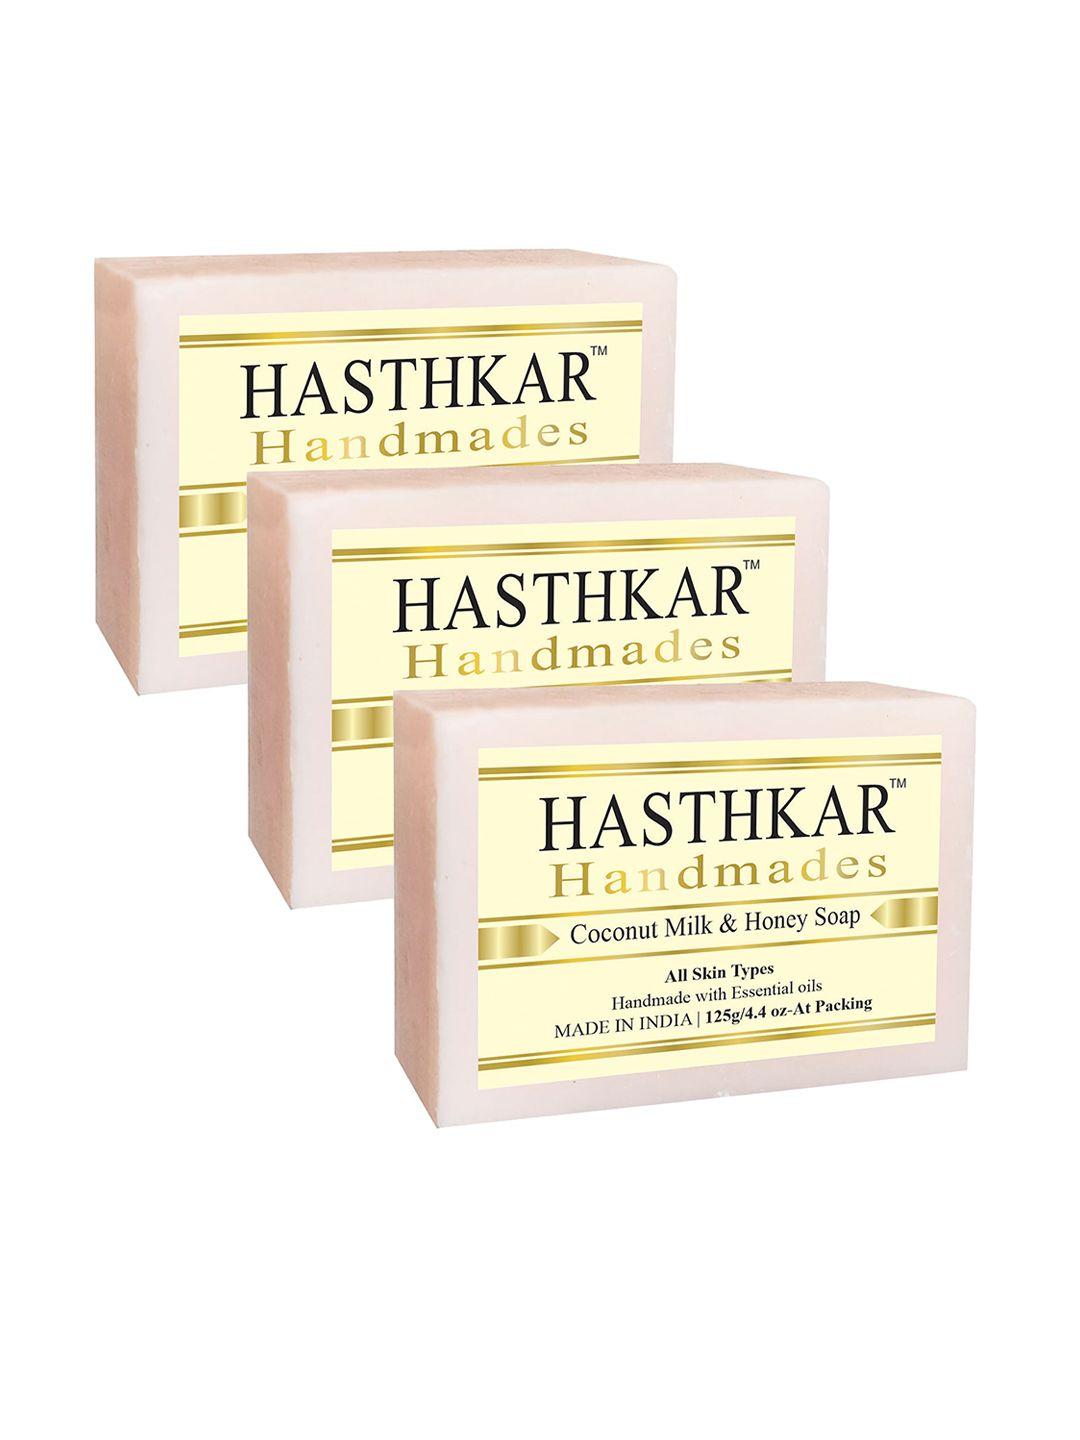 hasthkar set of 3 handmades glycerine coconut milk & honey soap 125gm